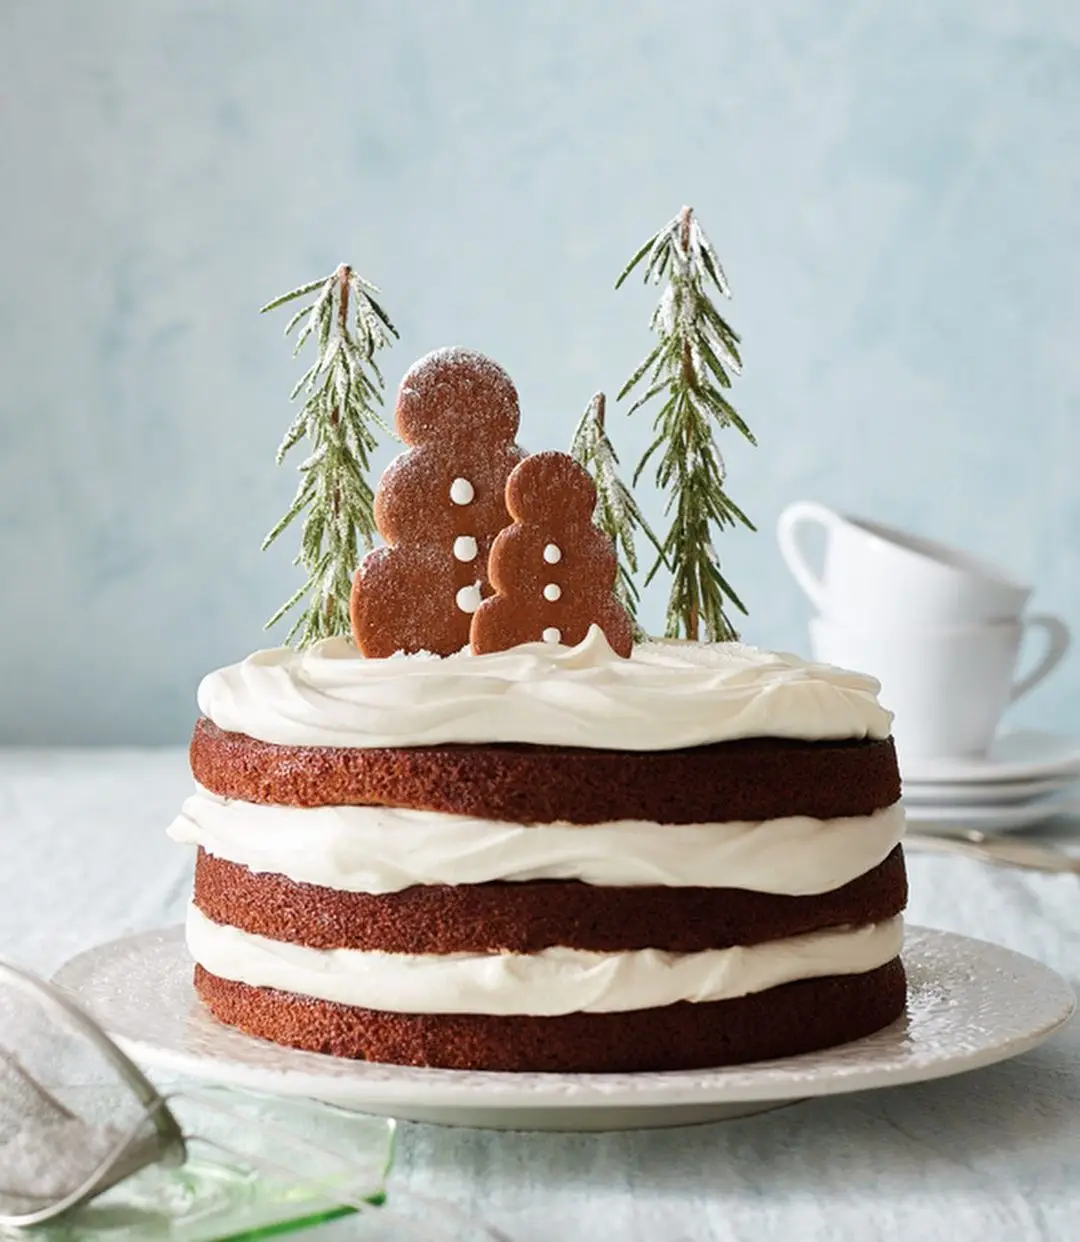 Stunning Christmas Cakes to Admire This Holiday Season ...